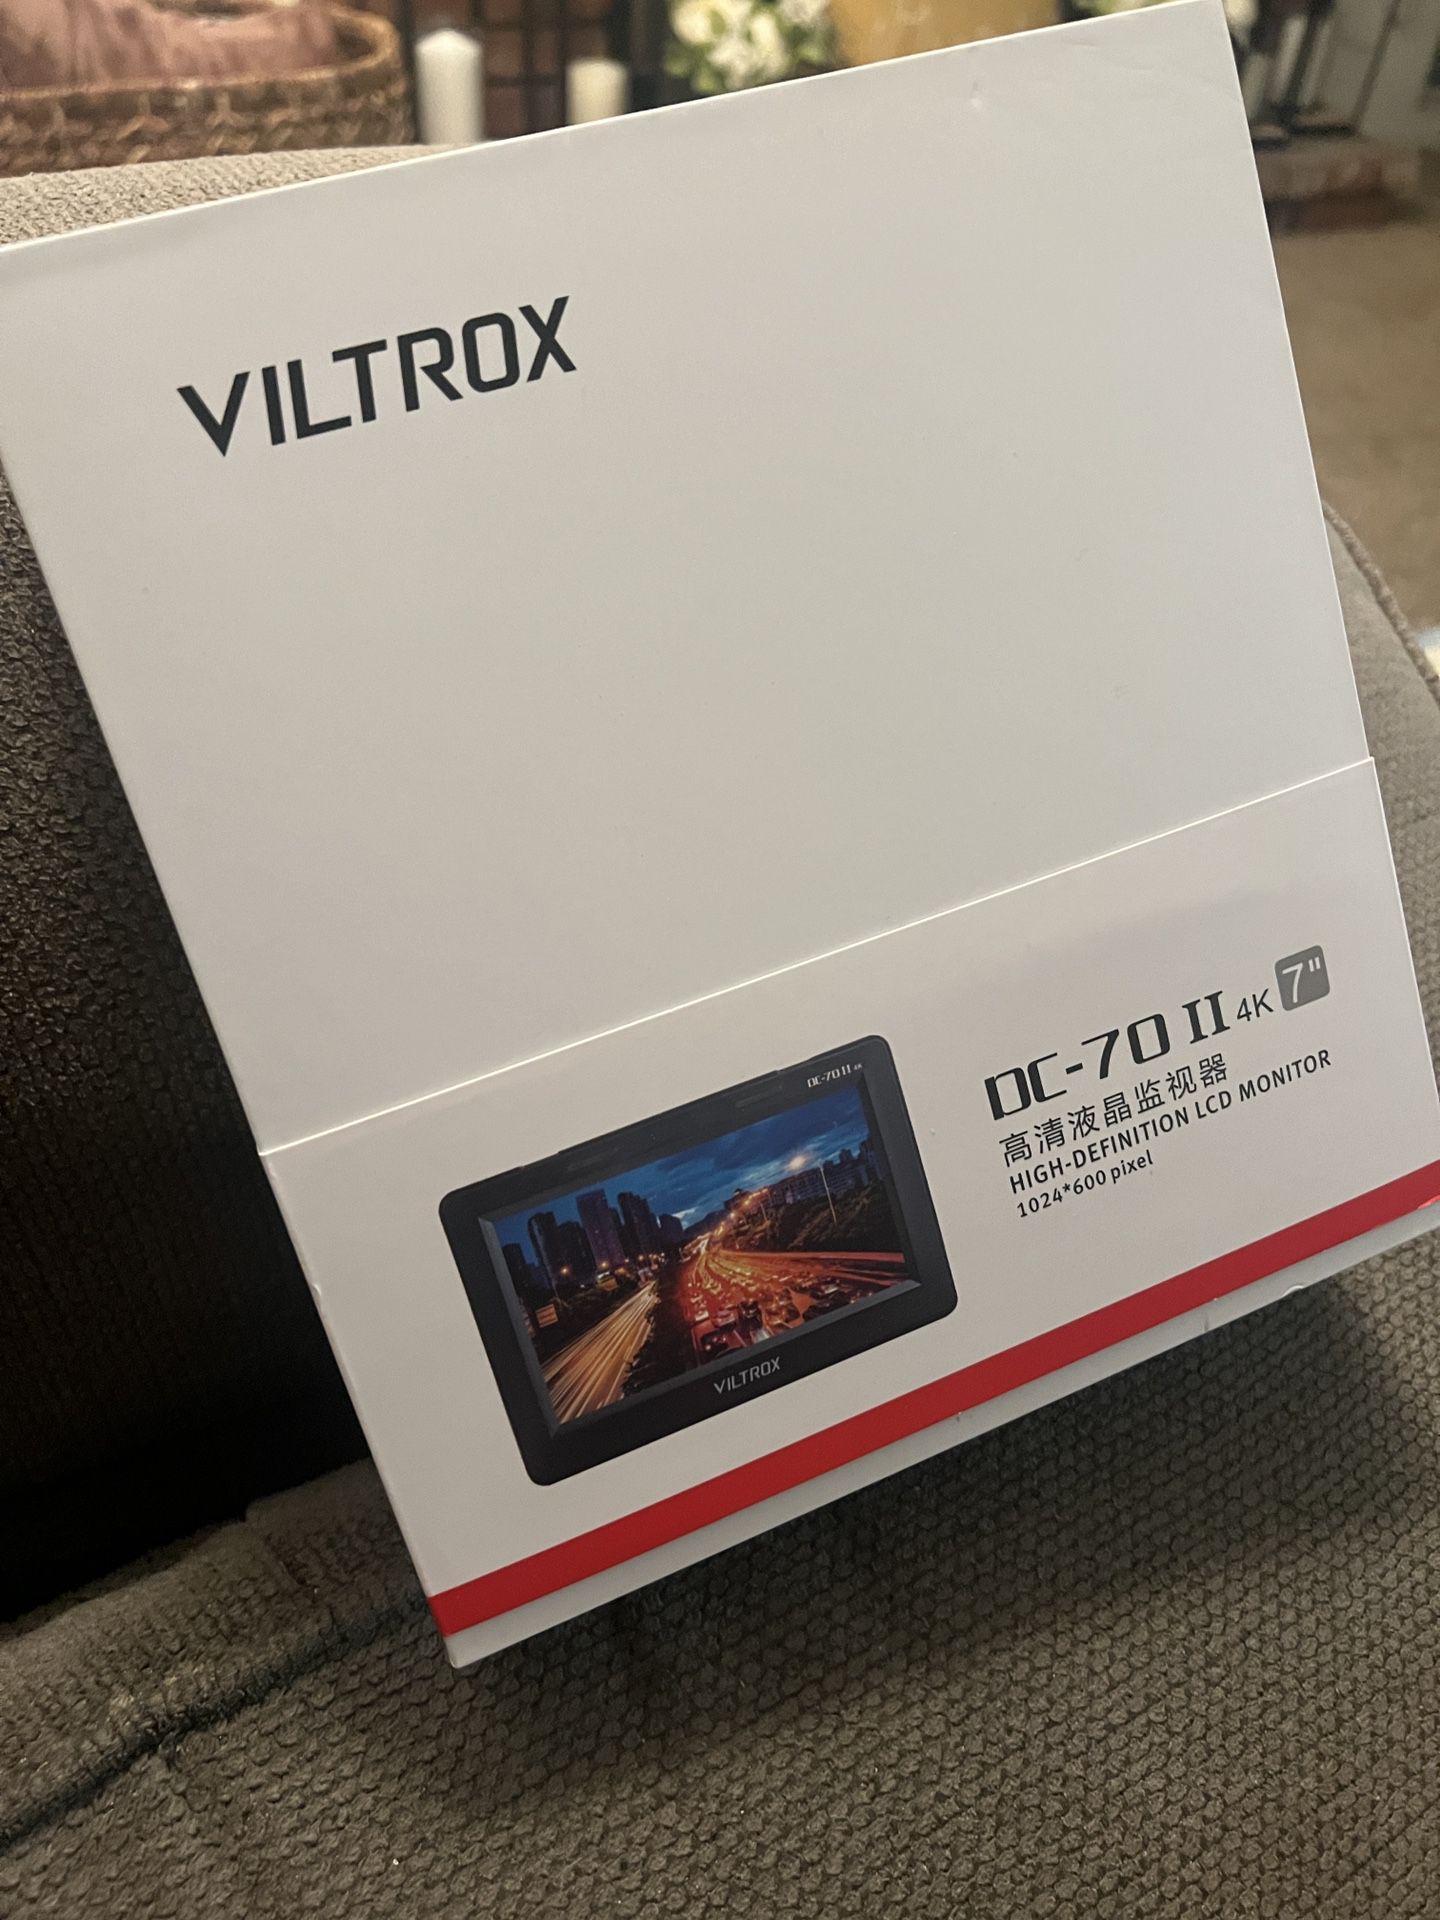 Viltrox DC-70 II 4K camera monitor 